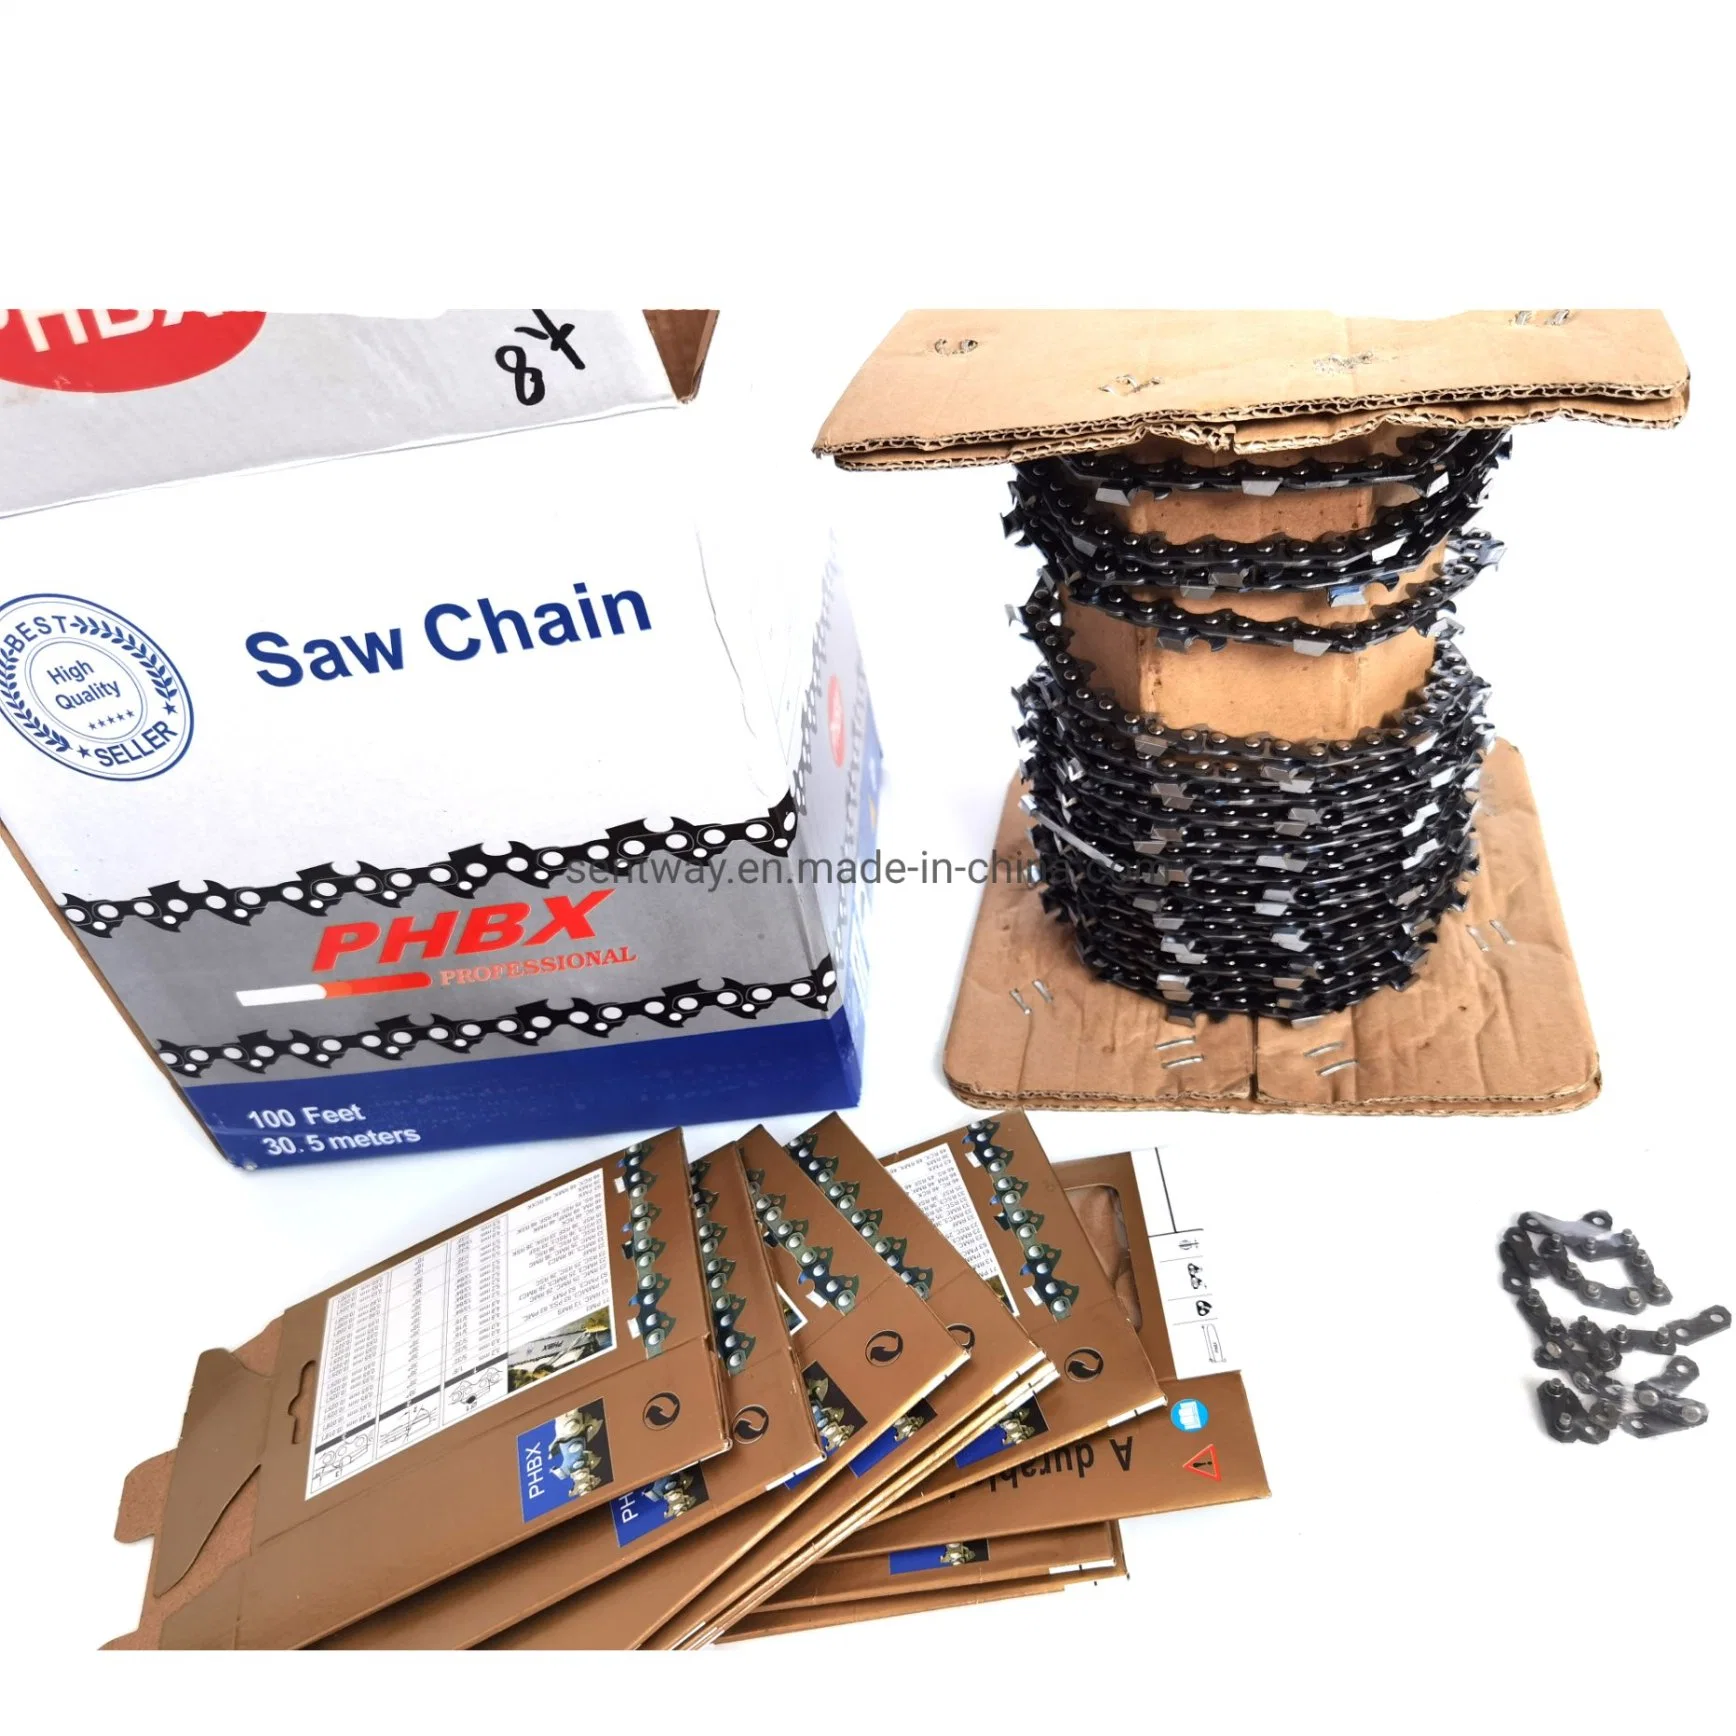 325 050 058 063 Saw Accessories Wood Cutting Chain Garden Line 62cc Chainsaw Parts